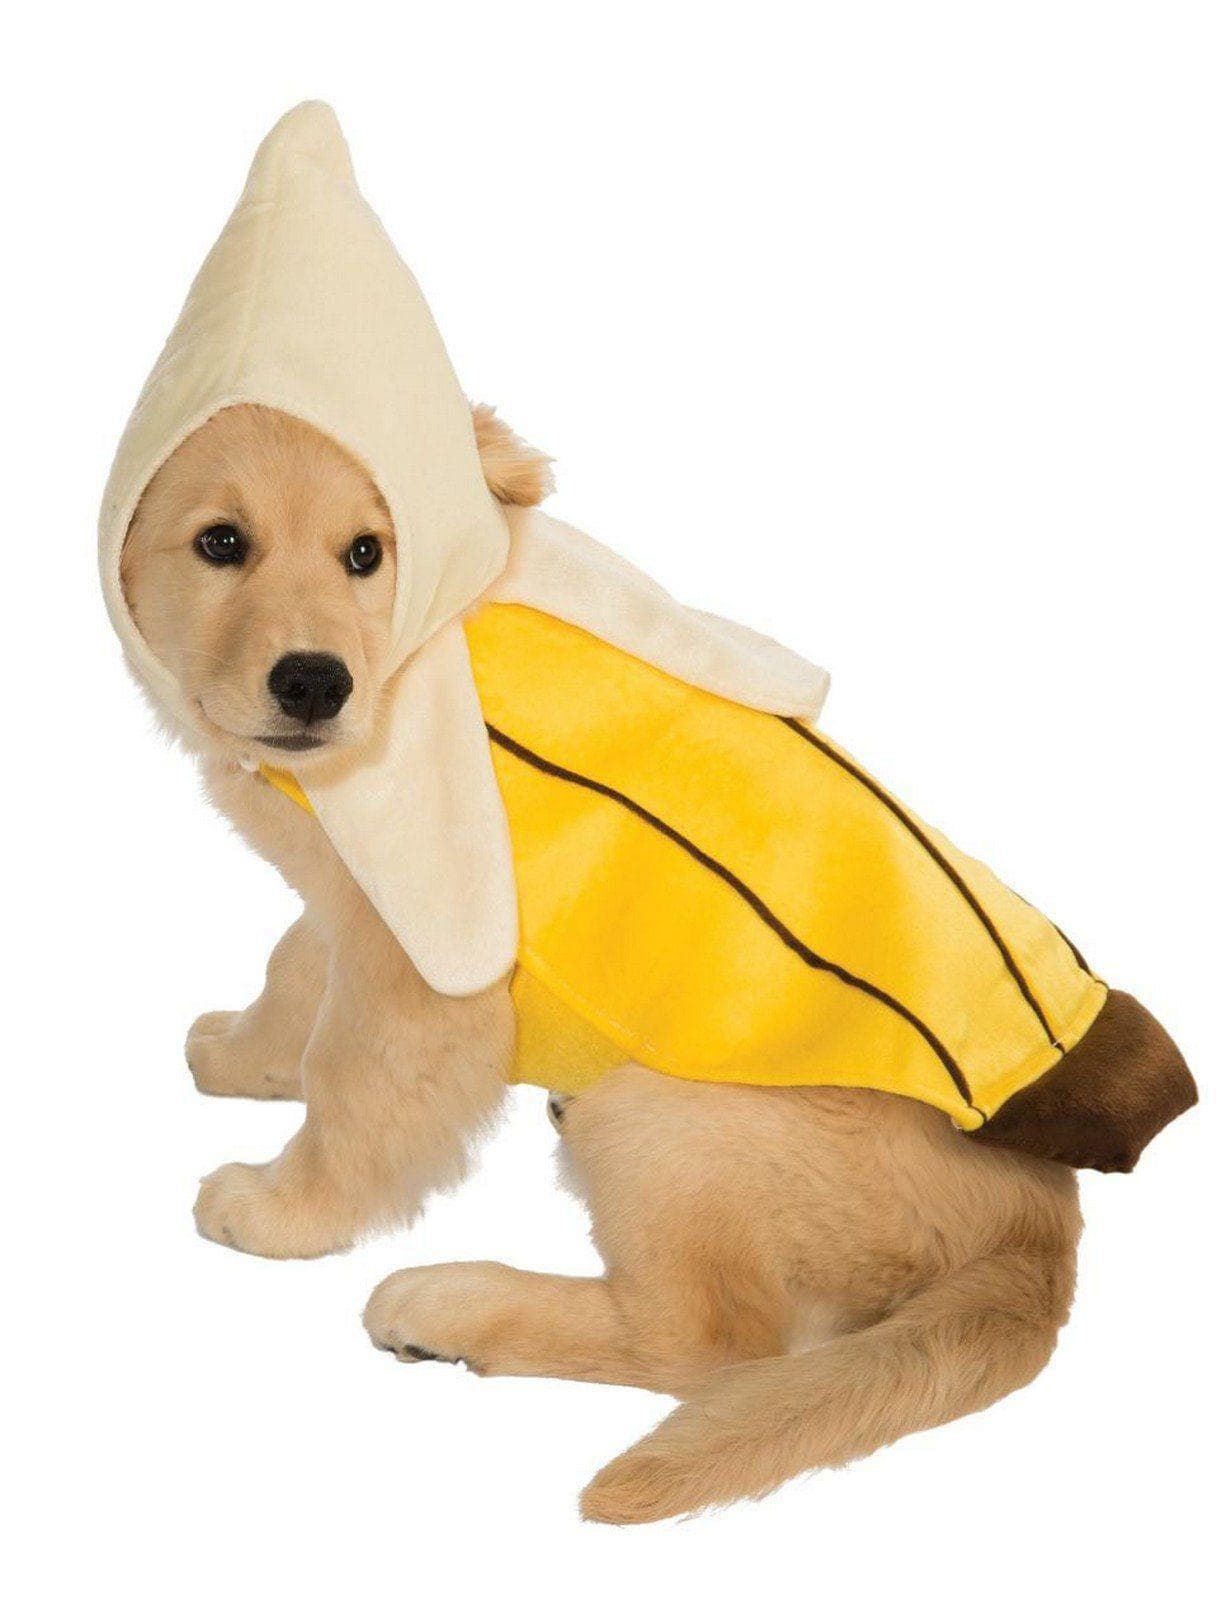 Banana Pet Costume - costumes.com